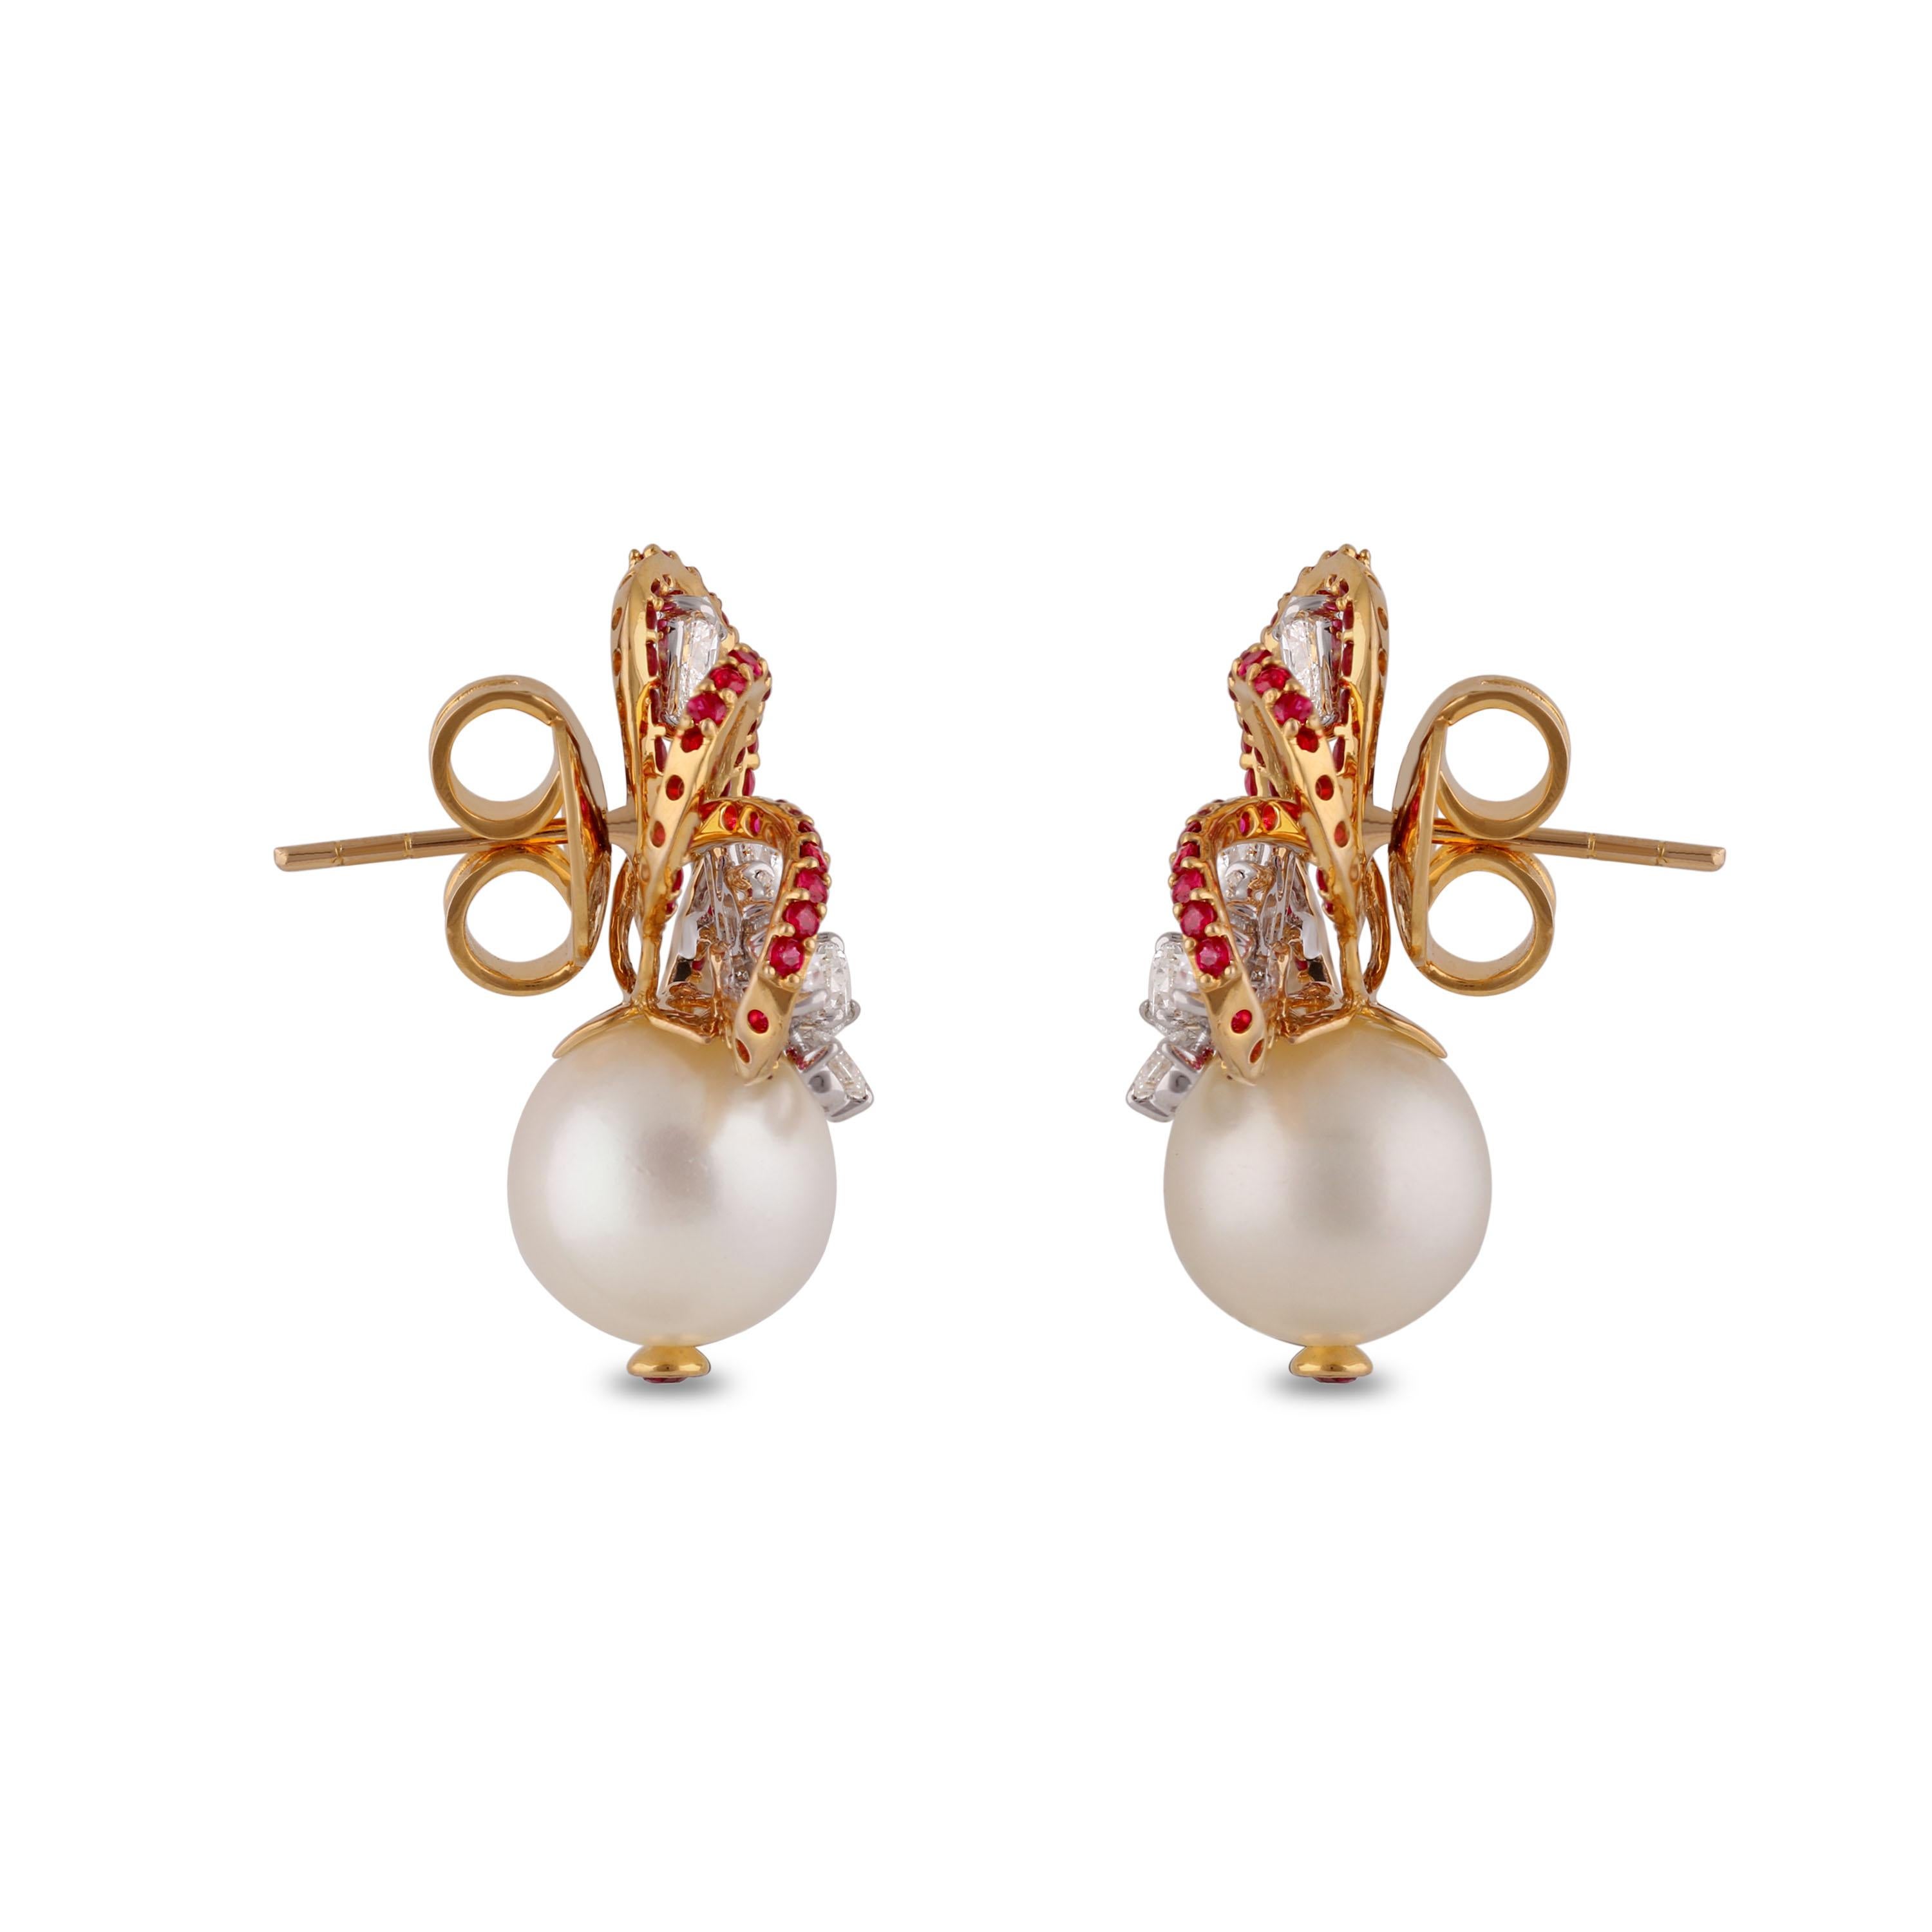 Studio Rêves Diamond and Rubies with Pearls Earrings in 18 Karat Gold For Sale 1